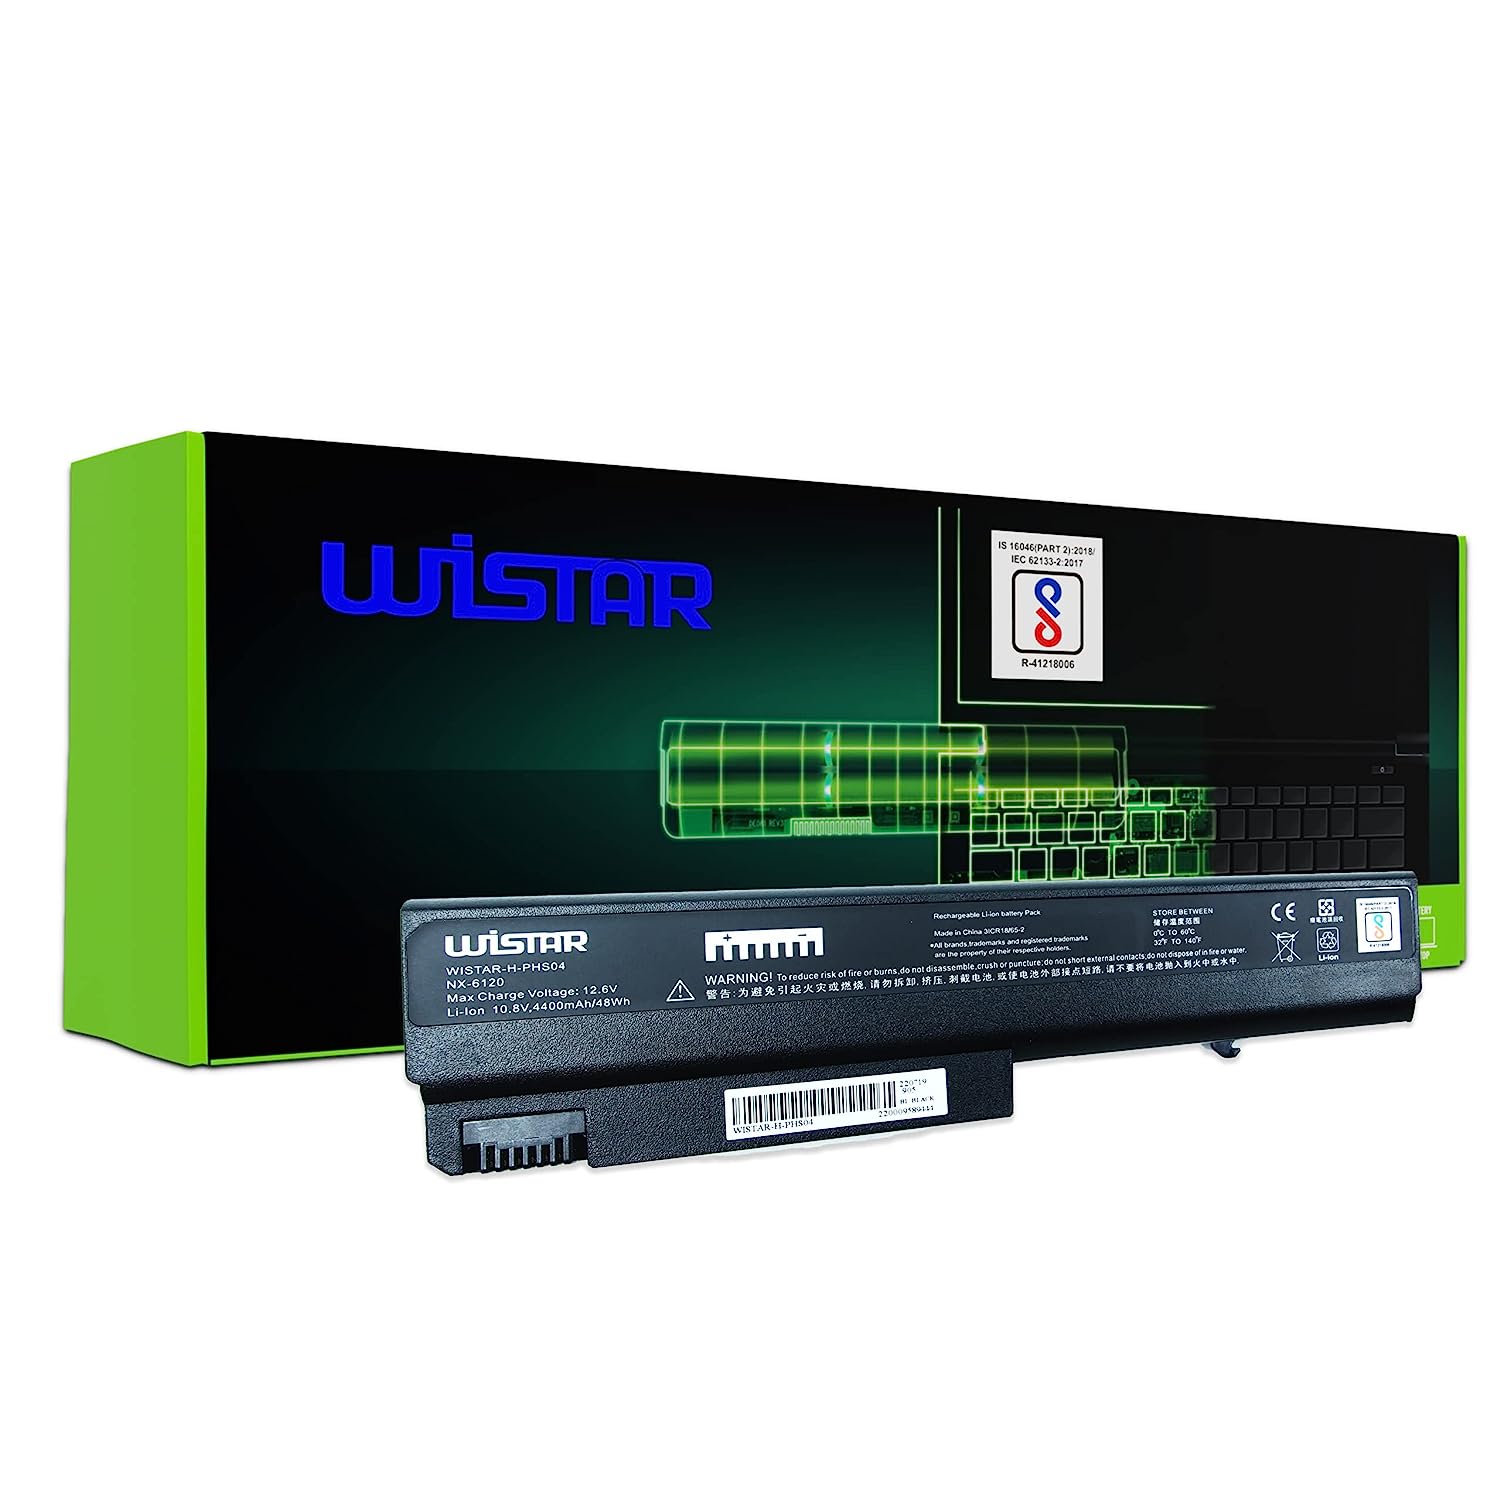 WISTAR Laptop Battery PB994 PB994a for HP Compaq NX6120 NC6120 NX6110 NC6400 NC6120 NX6320 HSTNN-DB28 HSTNN-FB05 Black